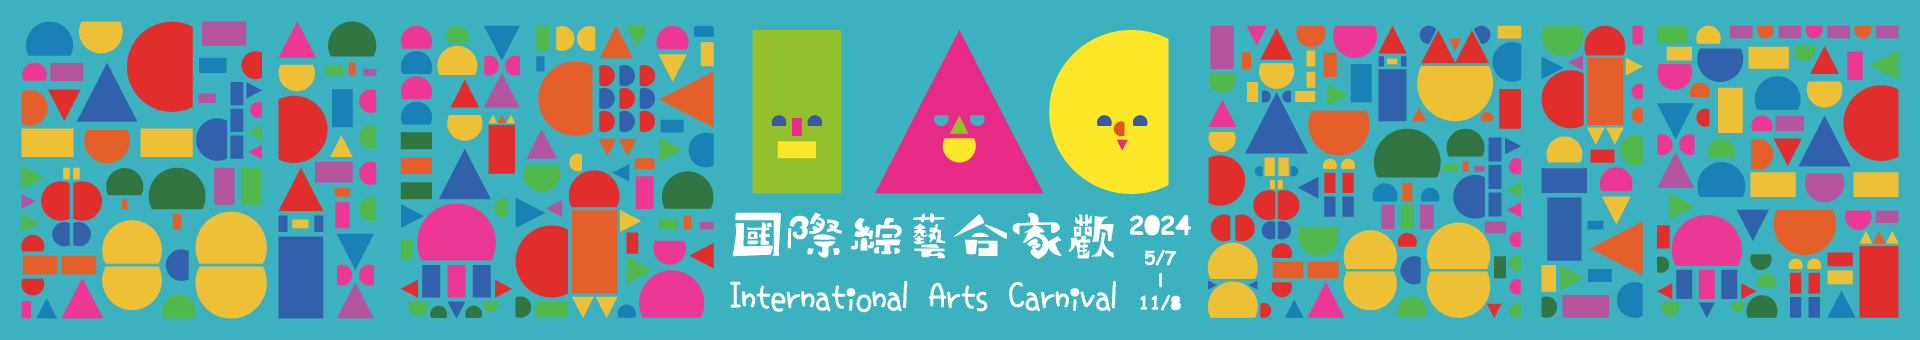 International Arts Carnival 2024